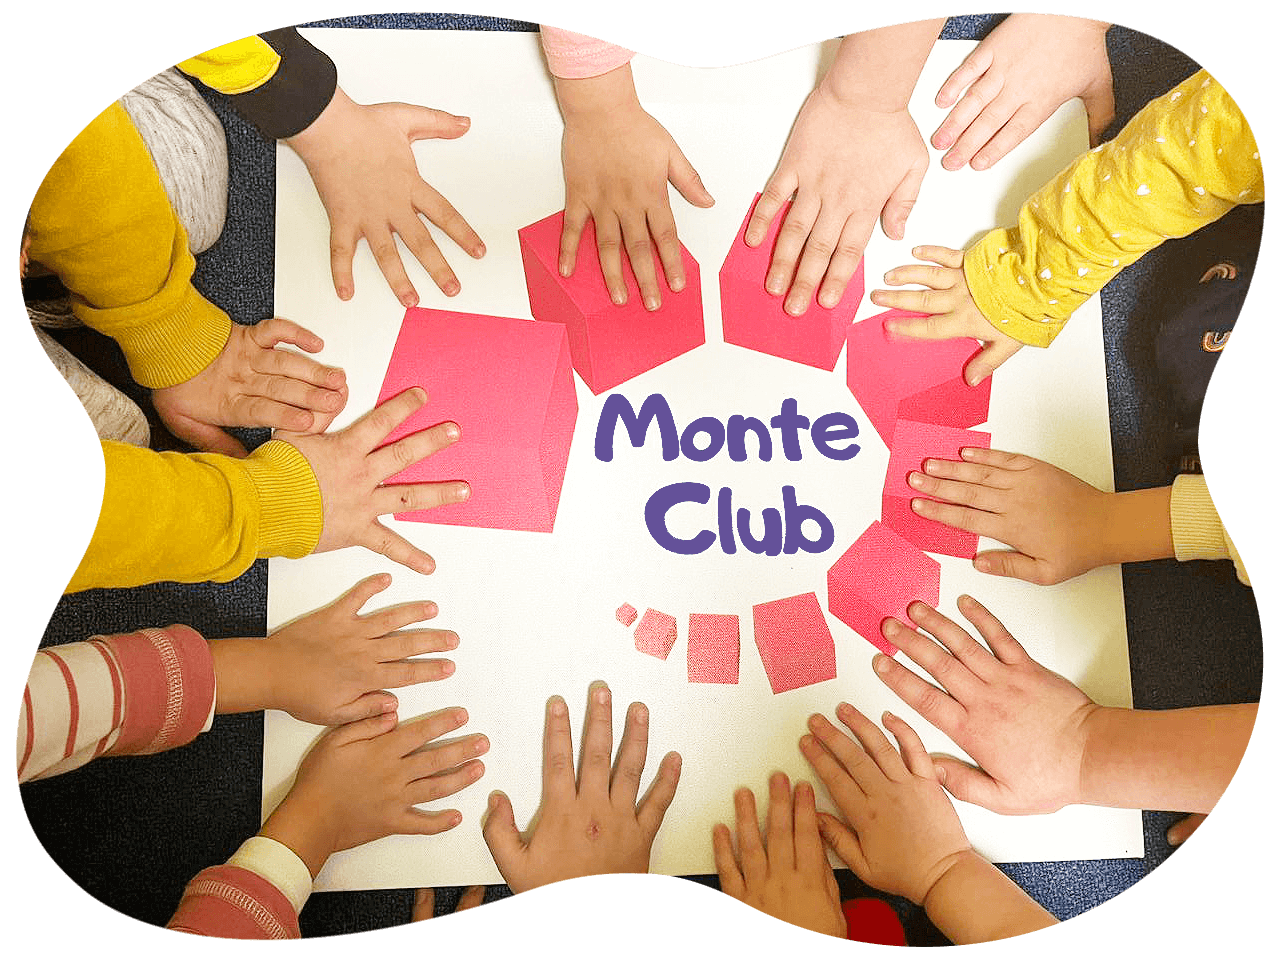 Monte Club main image